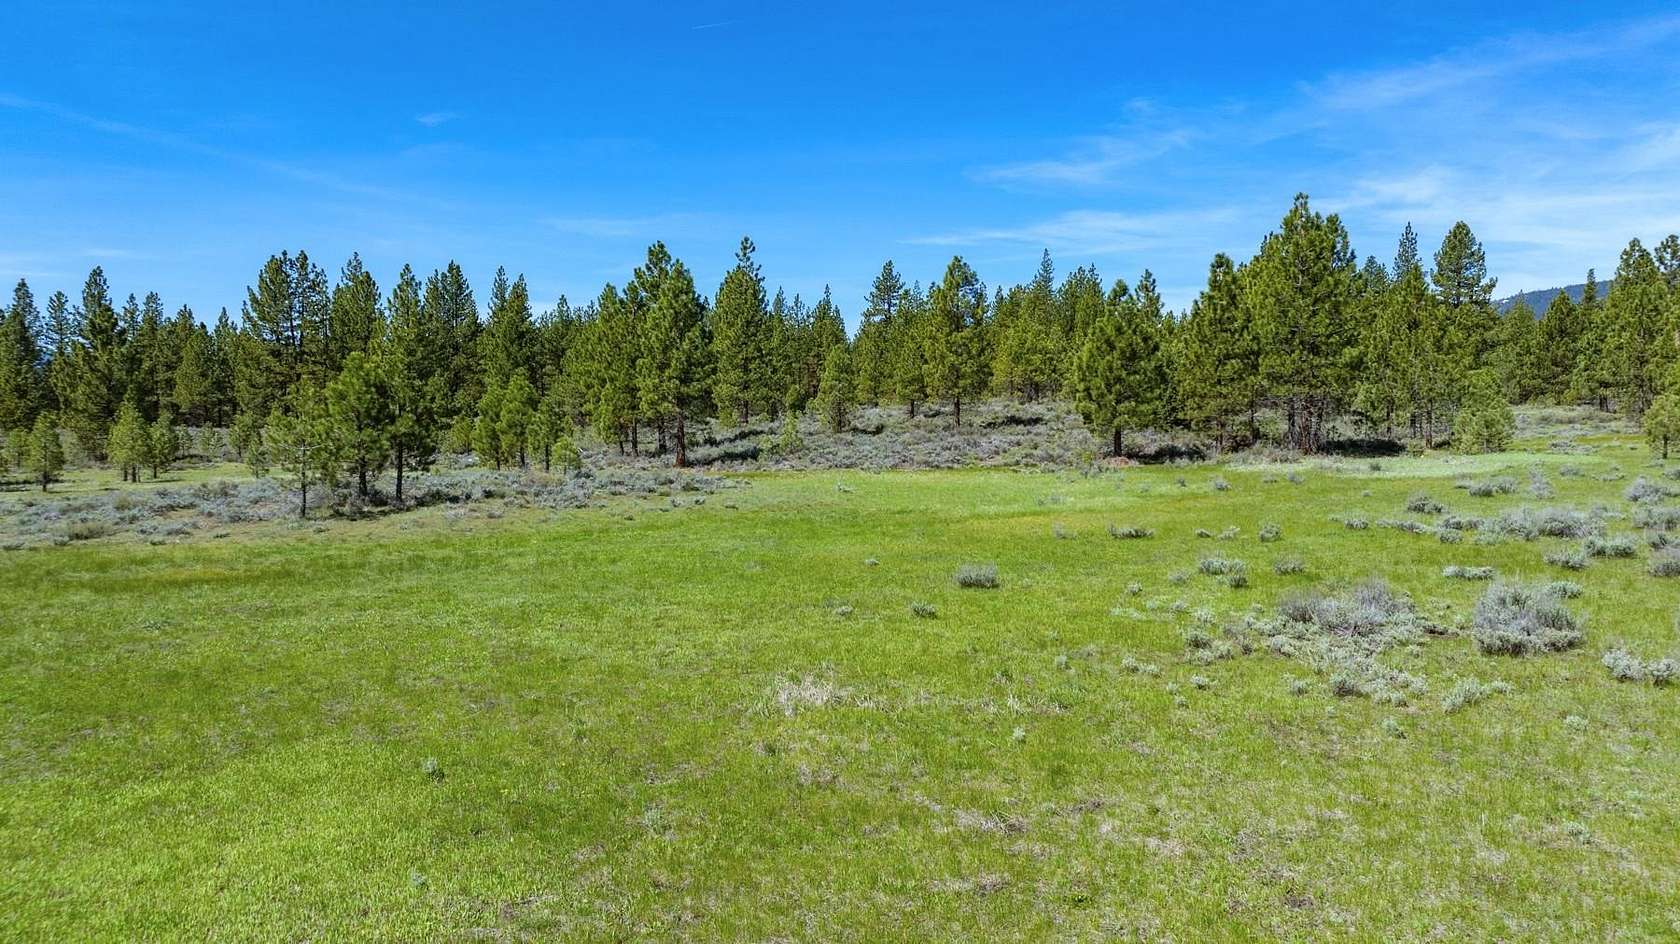 163 Acres of Land for Sale in Portola, California